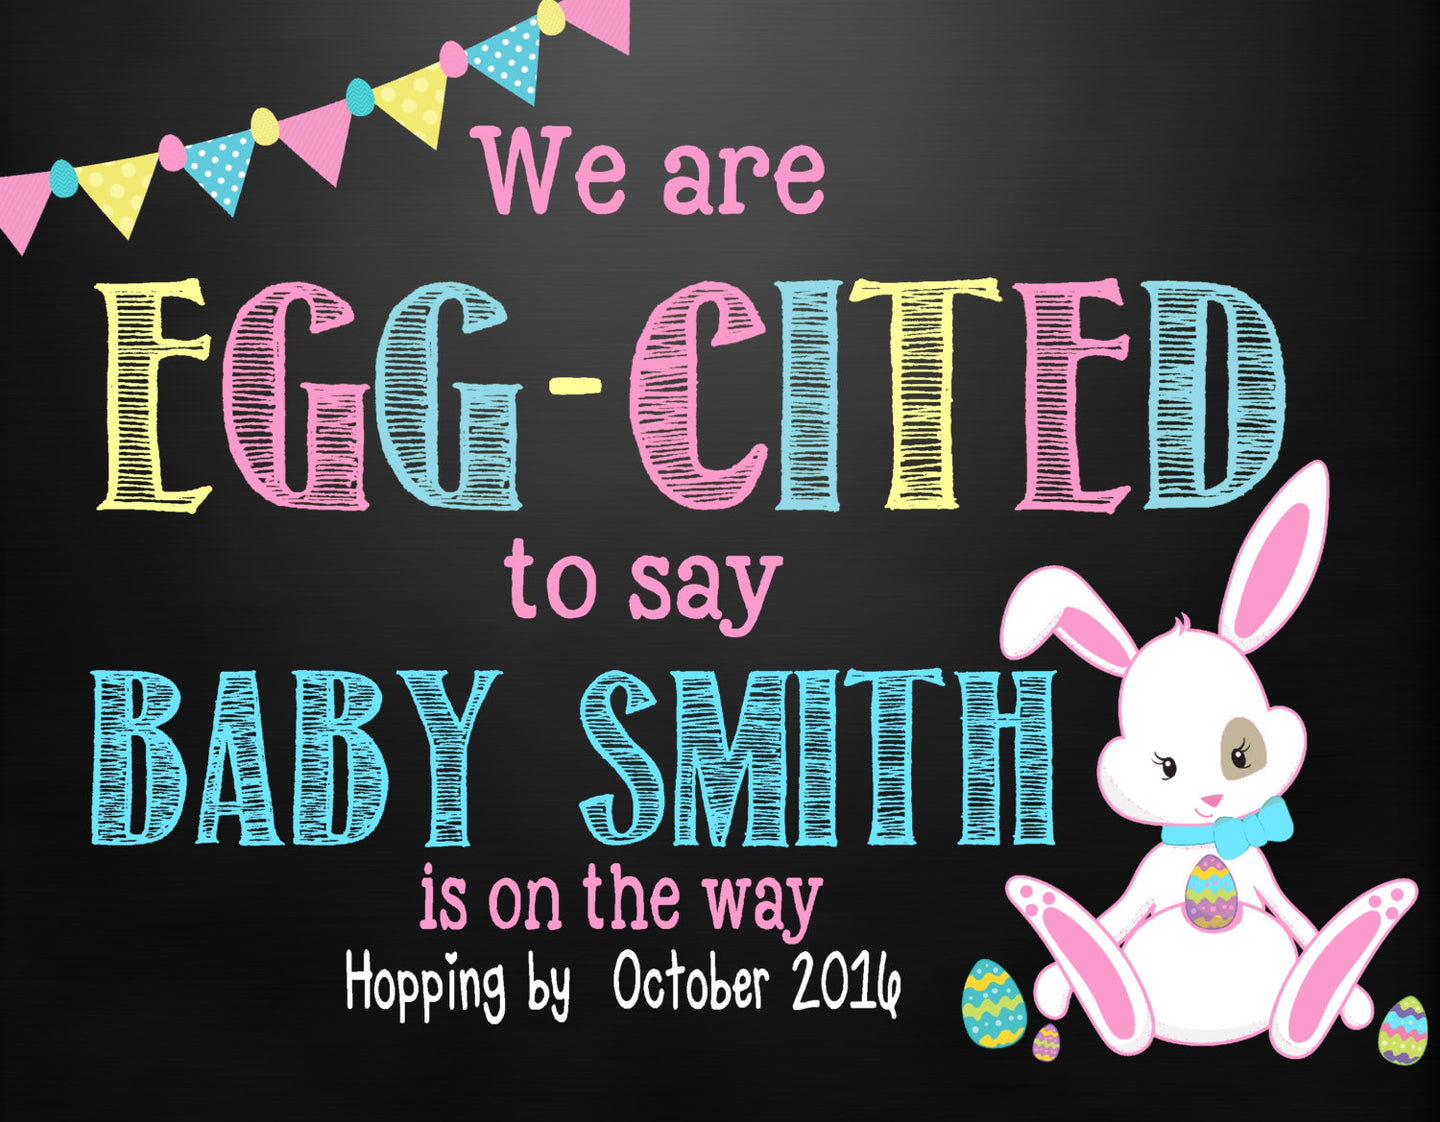 Easter Pregnancy Announcement| Easter Announcement | Easter Pregnancy Reveal | easter peeps | Easter chalkboard | Easter Egg Hunt